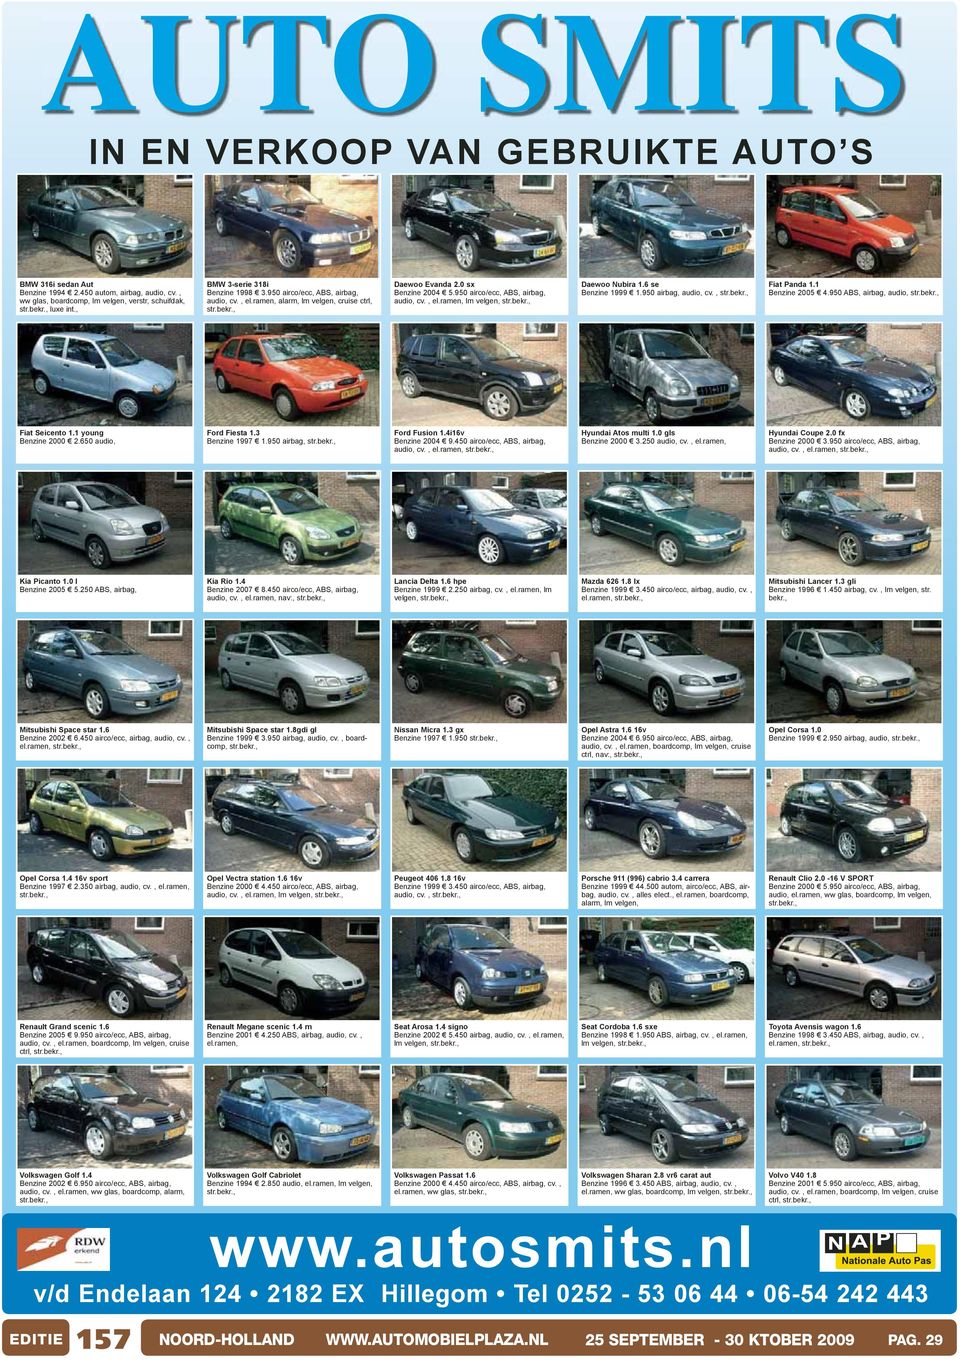 6 se Benzine 1999 1.950 airbag, audio, cv., Fiat Panda 1.1 Benzine 2005 4.950 ABS, airbag, audio, Fiat Seicento 1.1 young Benzine 2000 2.650 audio, Ford Fiesta 1.3 Benzine 1997 1.